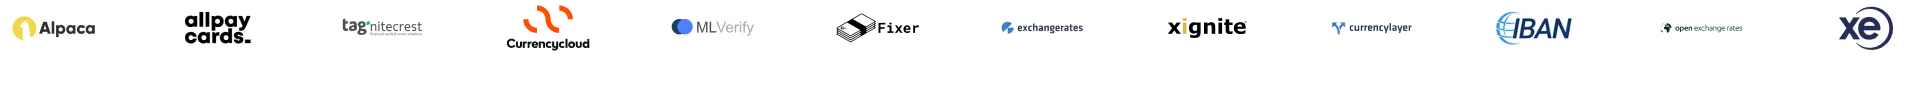 Companies logo